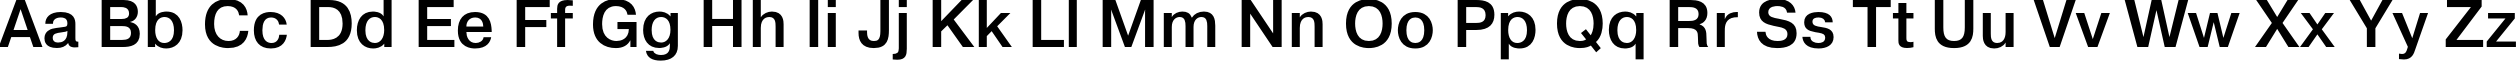 Пример написания английского алфавита шрифтом PragmaticaLightC Bold